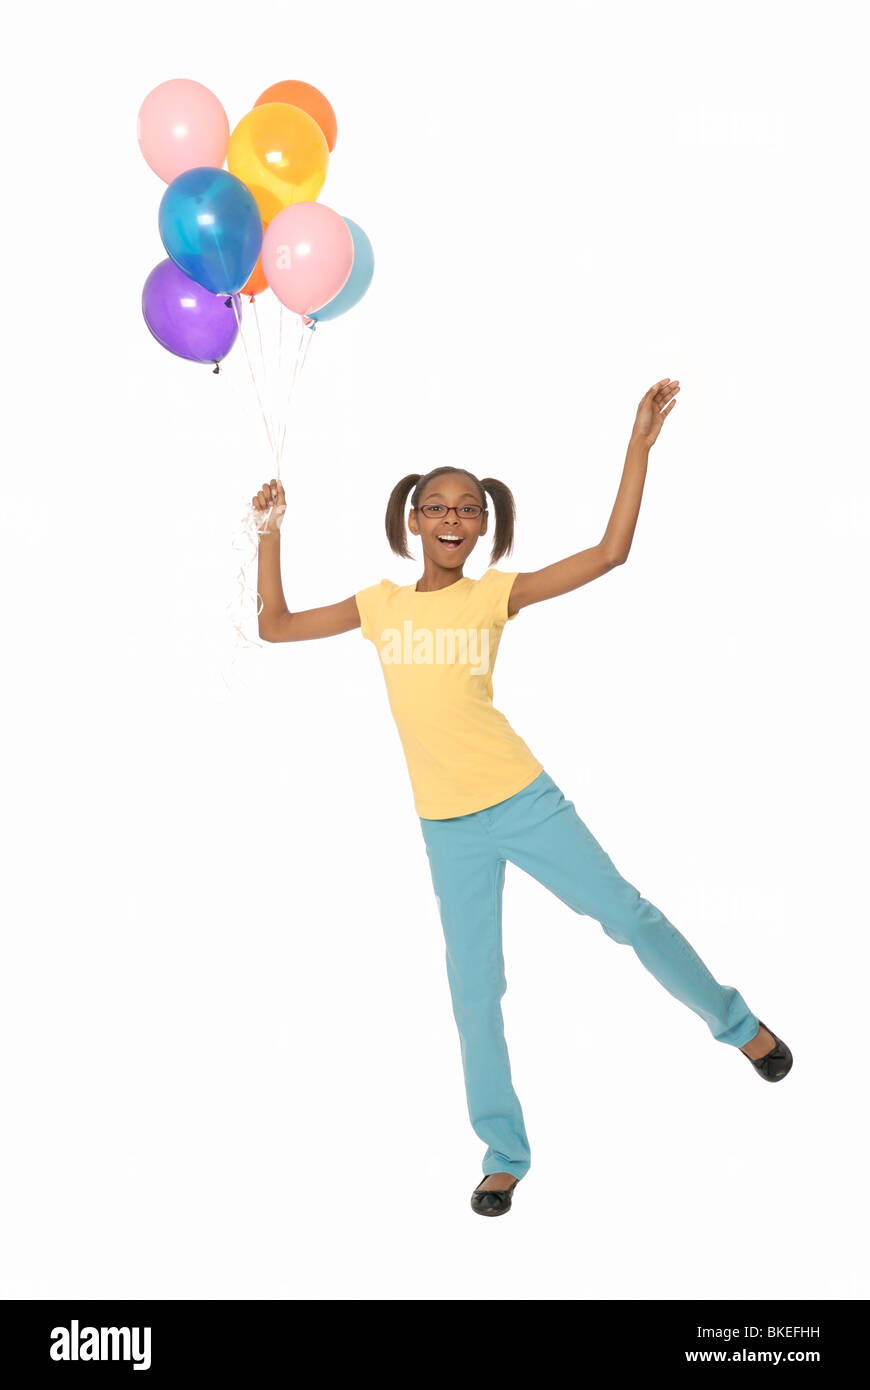 Ten year old girl holding balloons. Stock Photo